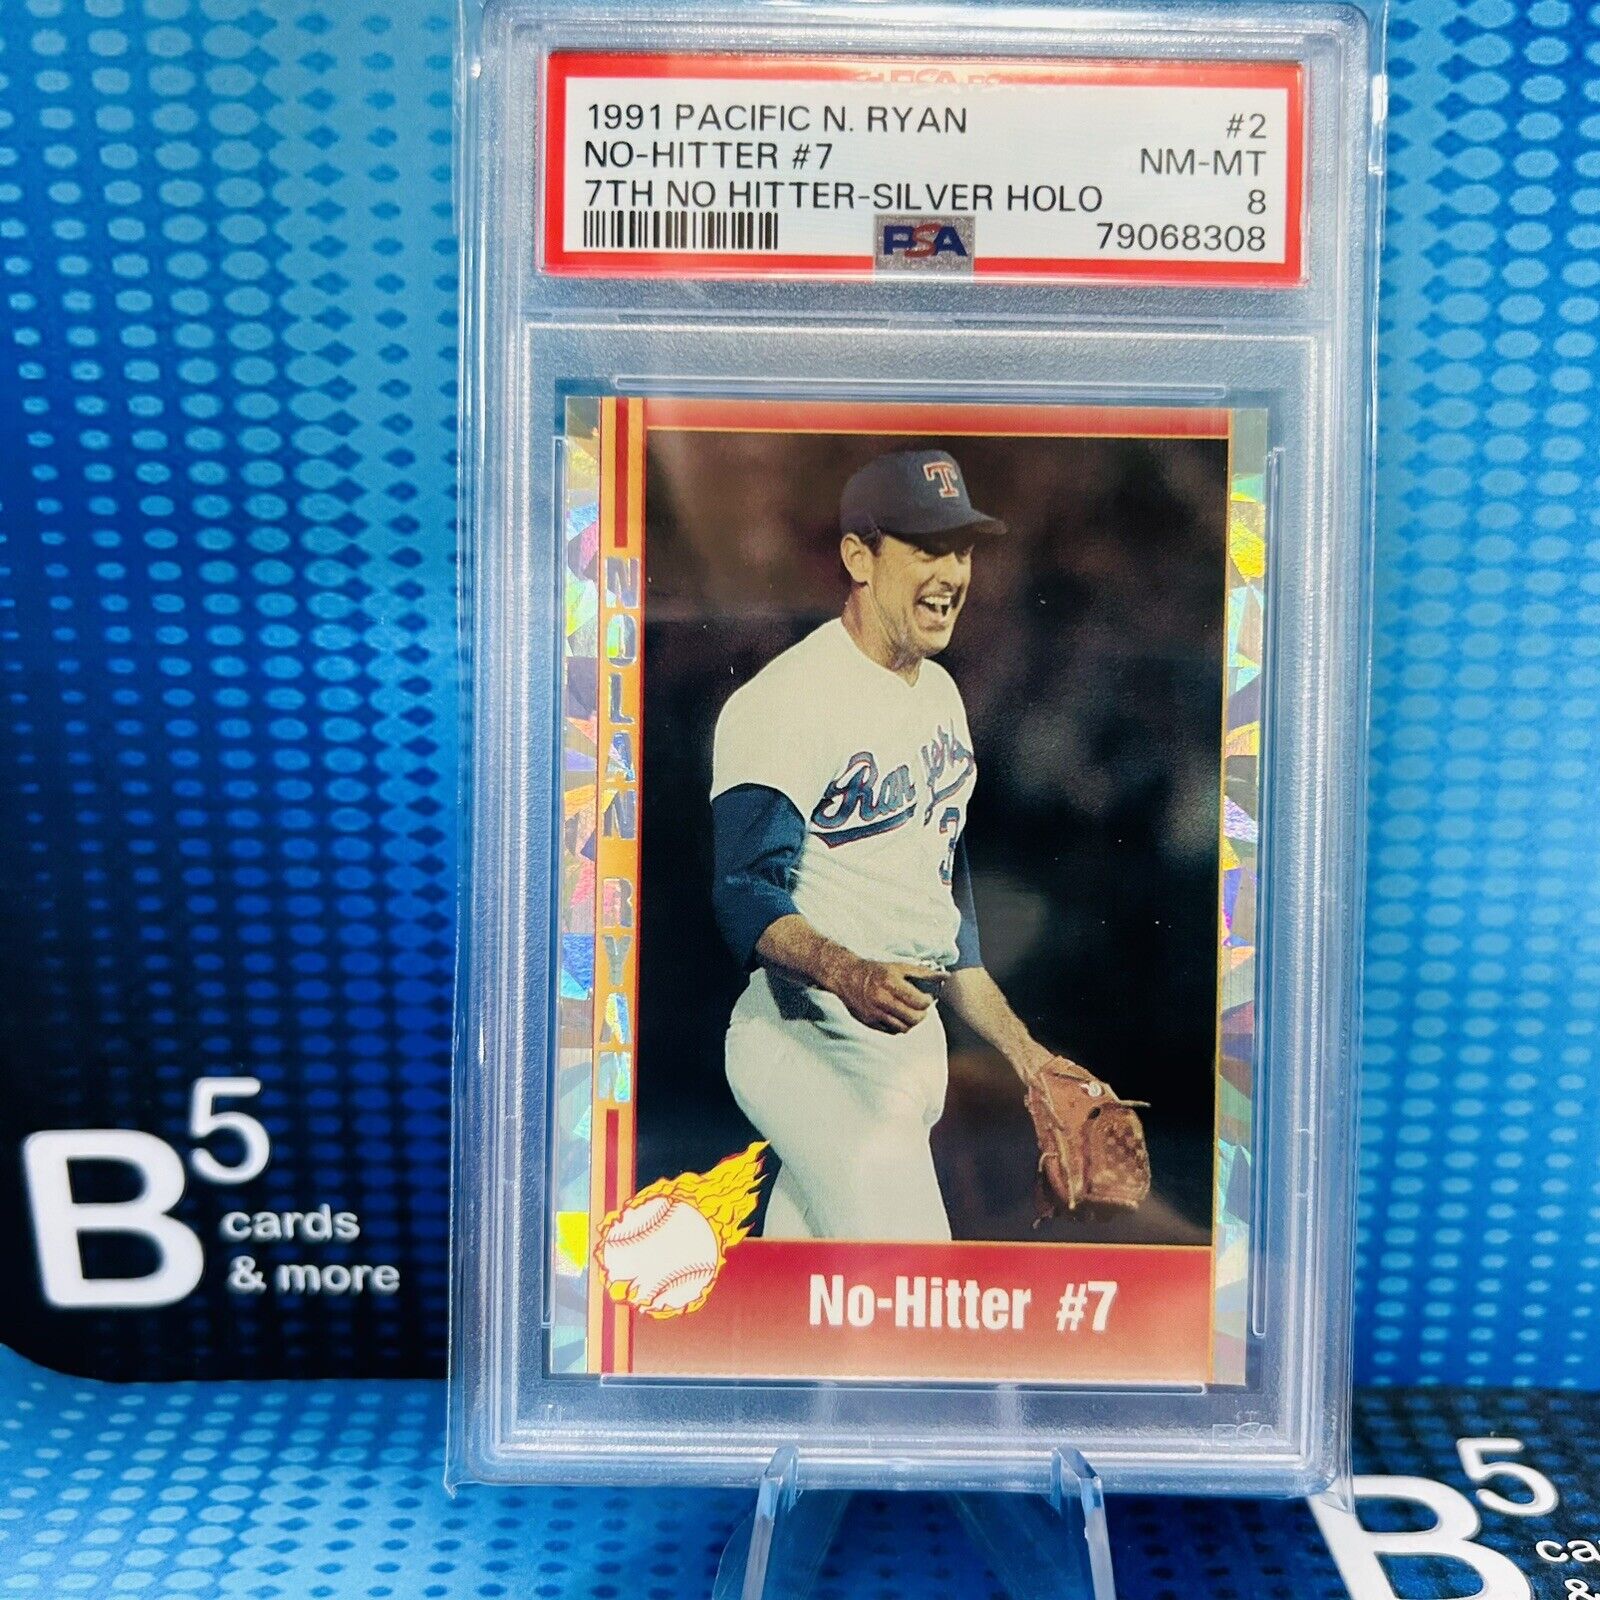 1991 Pacific Nolan Ryan 7th No-hitter Baseball #2 No-hitter Silver Holo PSA 8